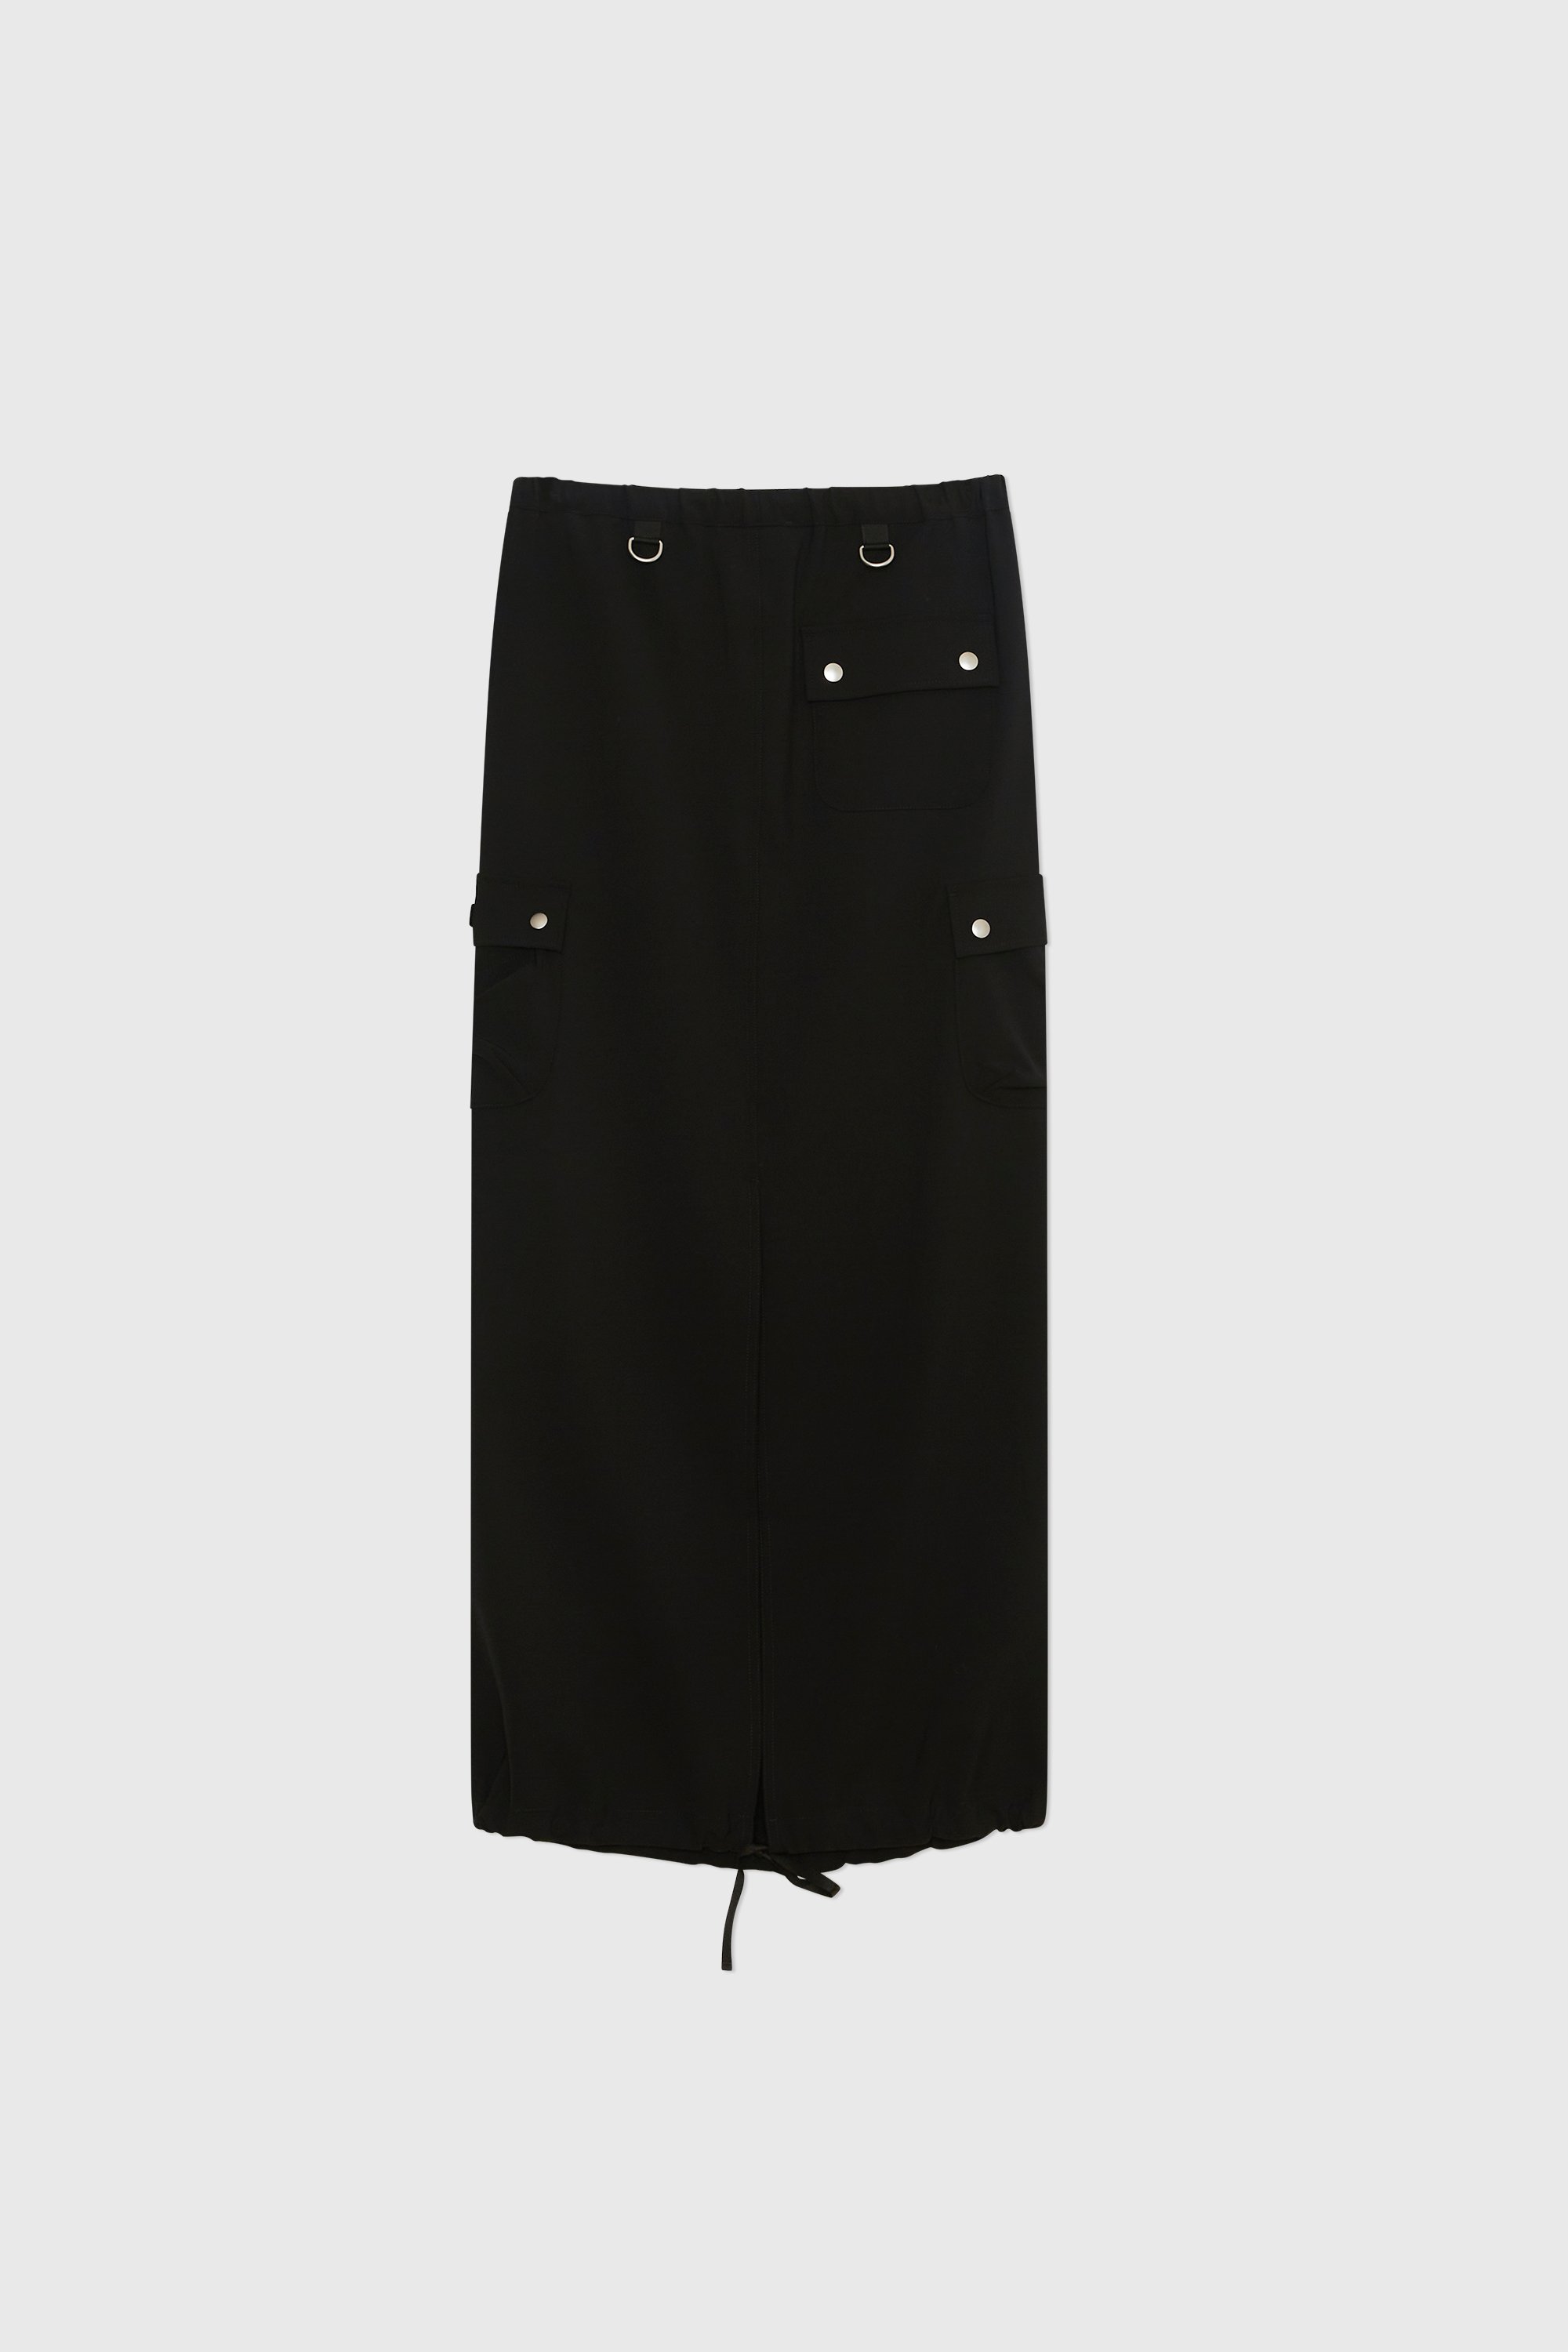 Coperni Black Tailored Miniskirt